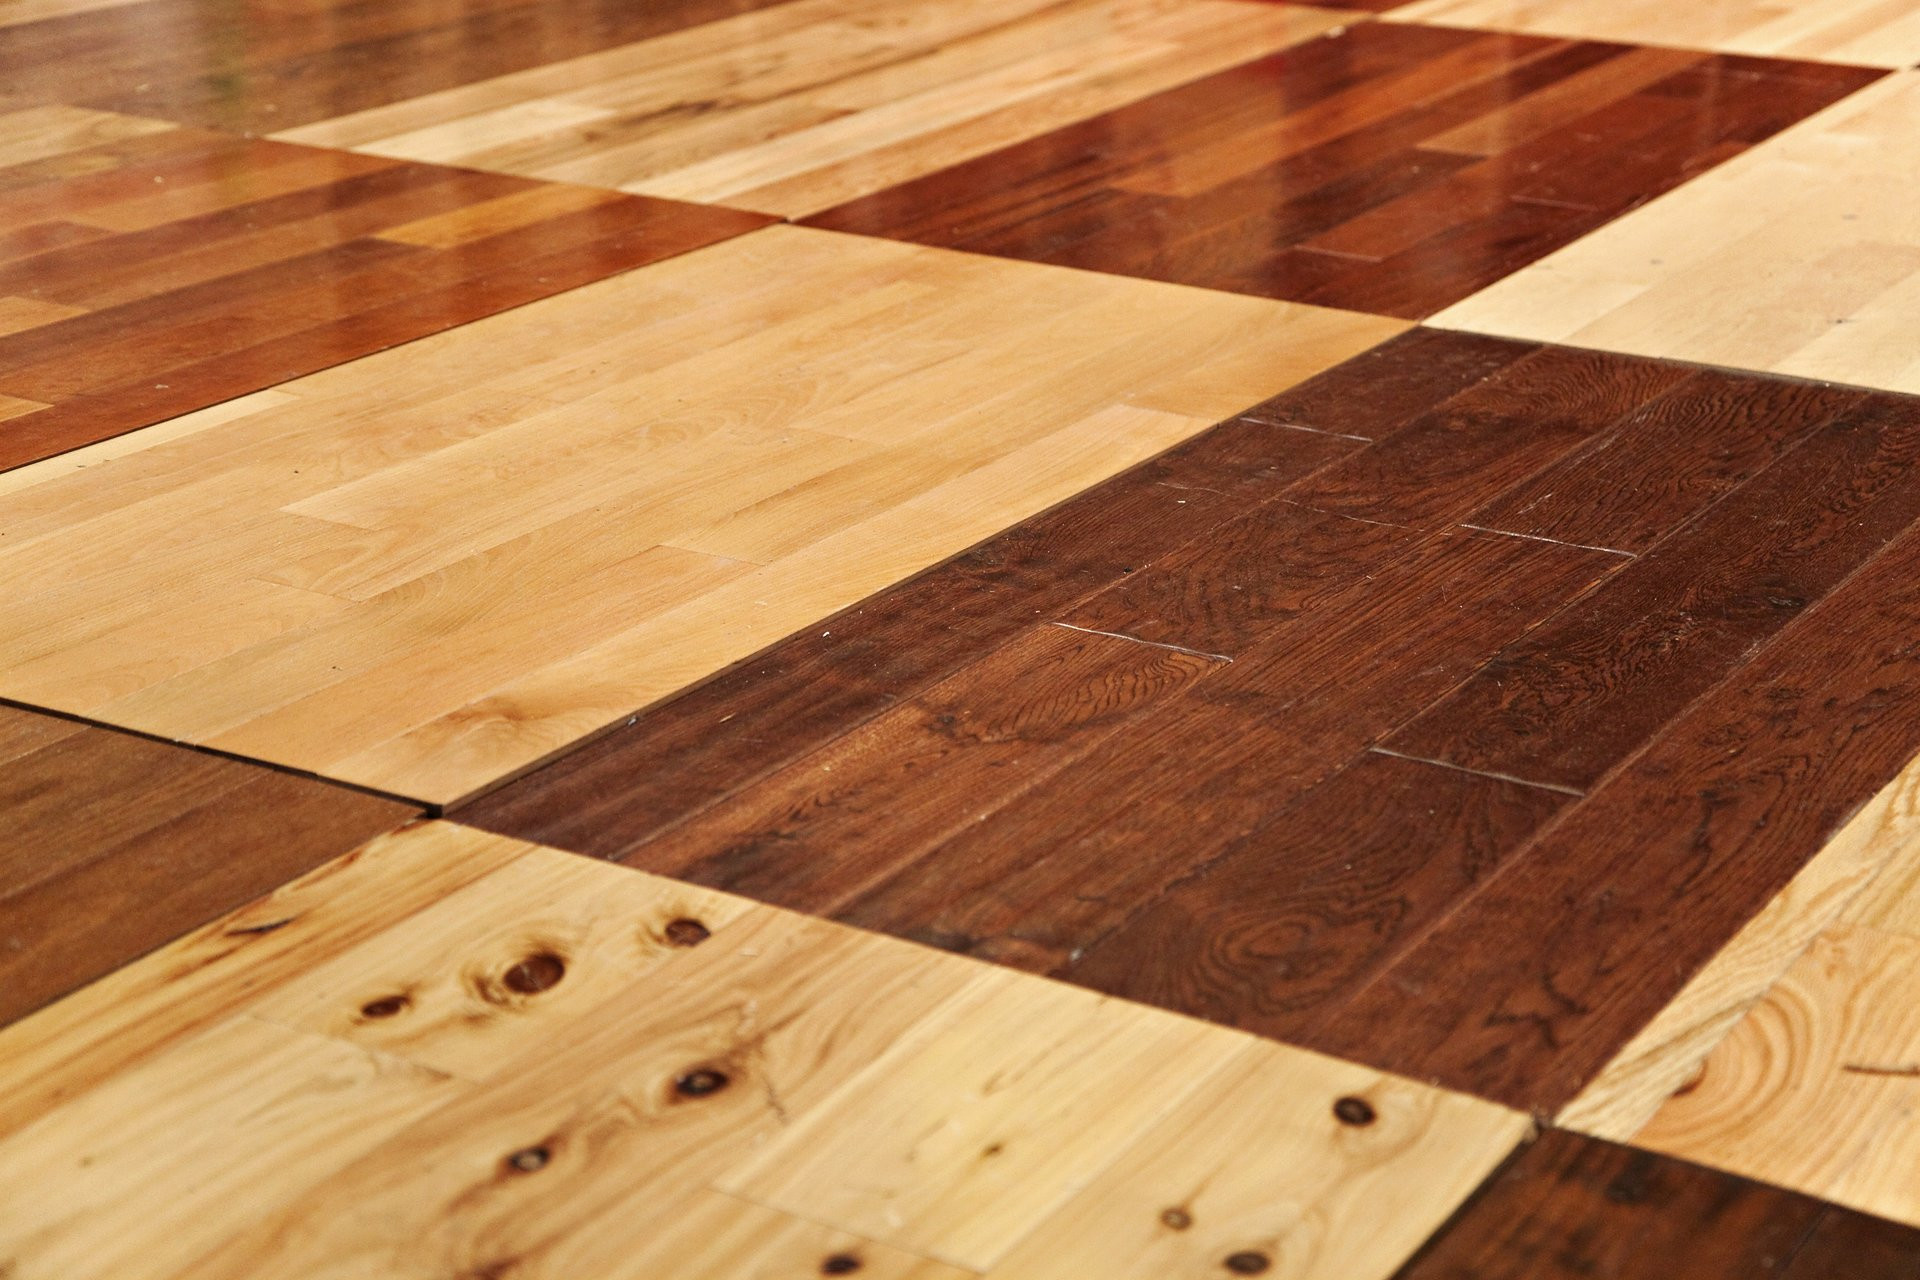 hardwood floor refinishing stratford ct of american floor service hardwood flooring fairfield ct intended for flooring